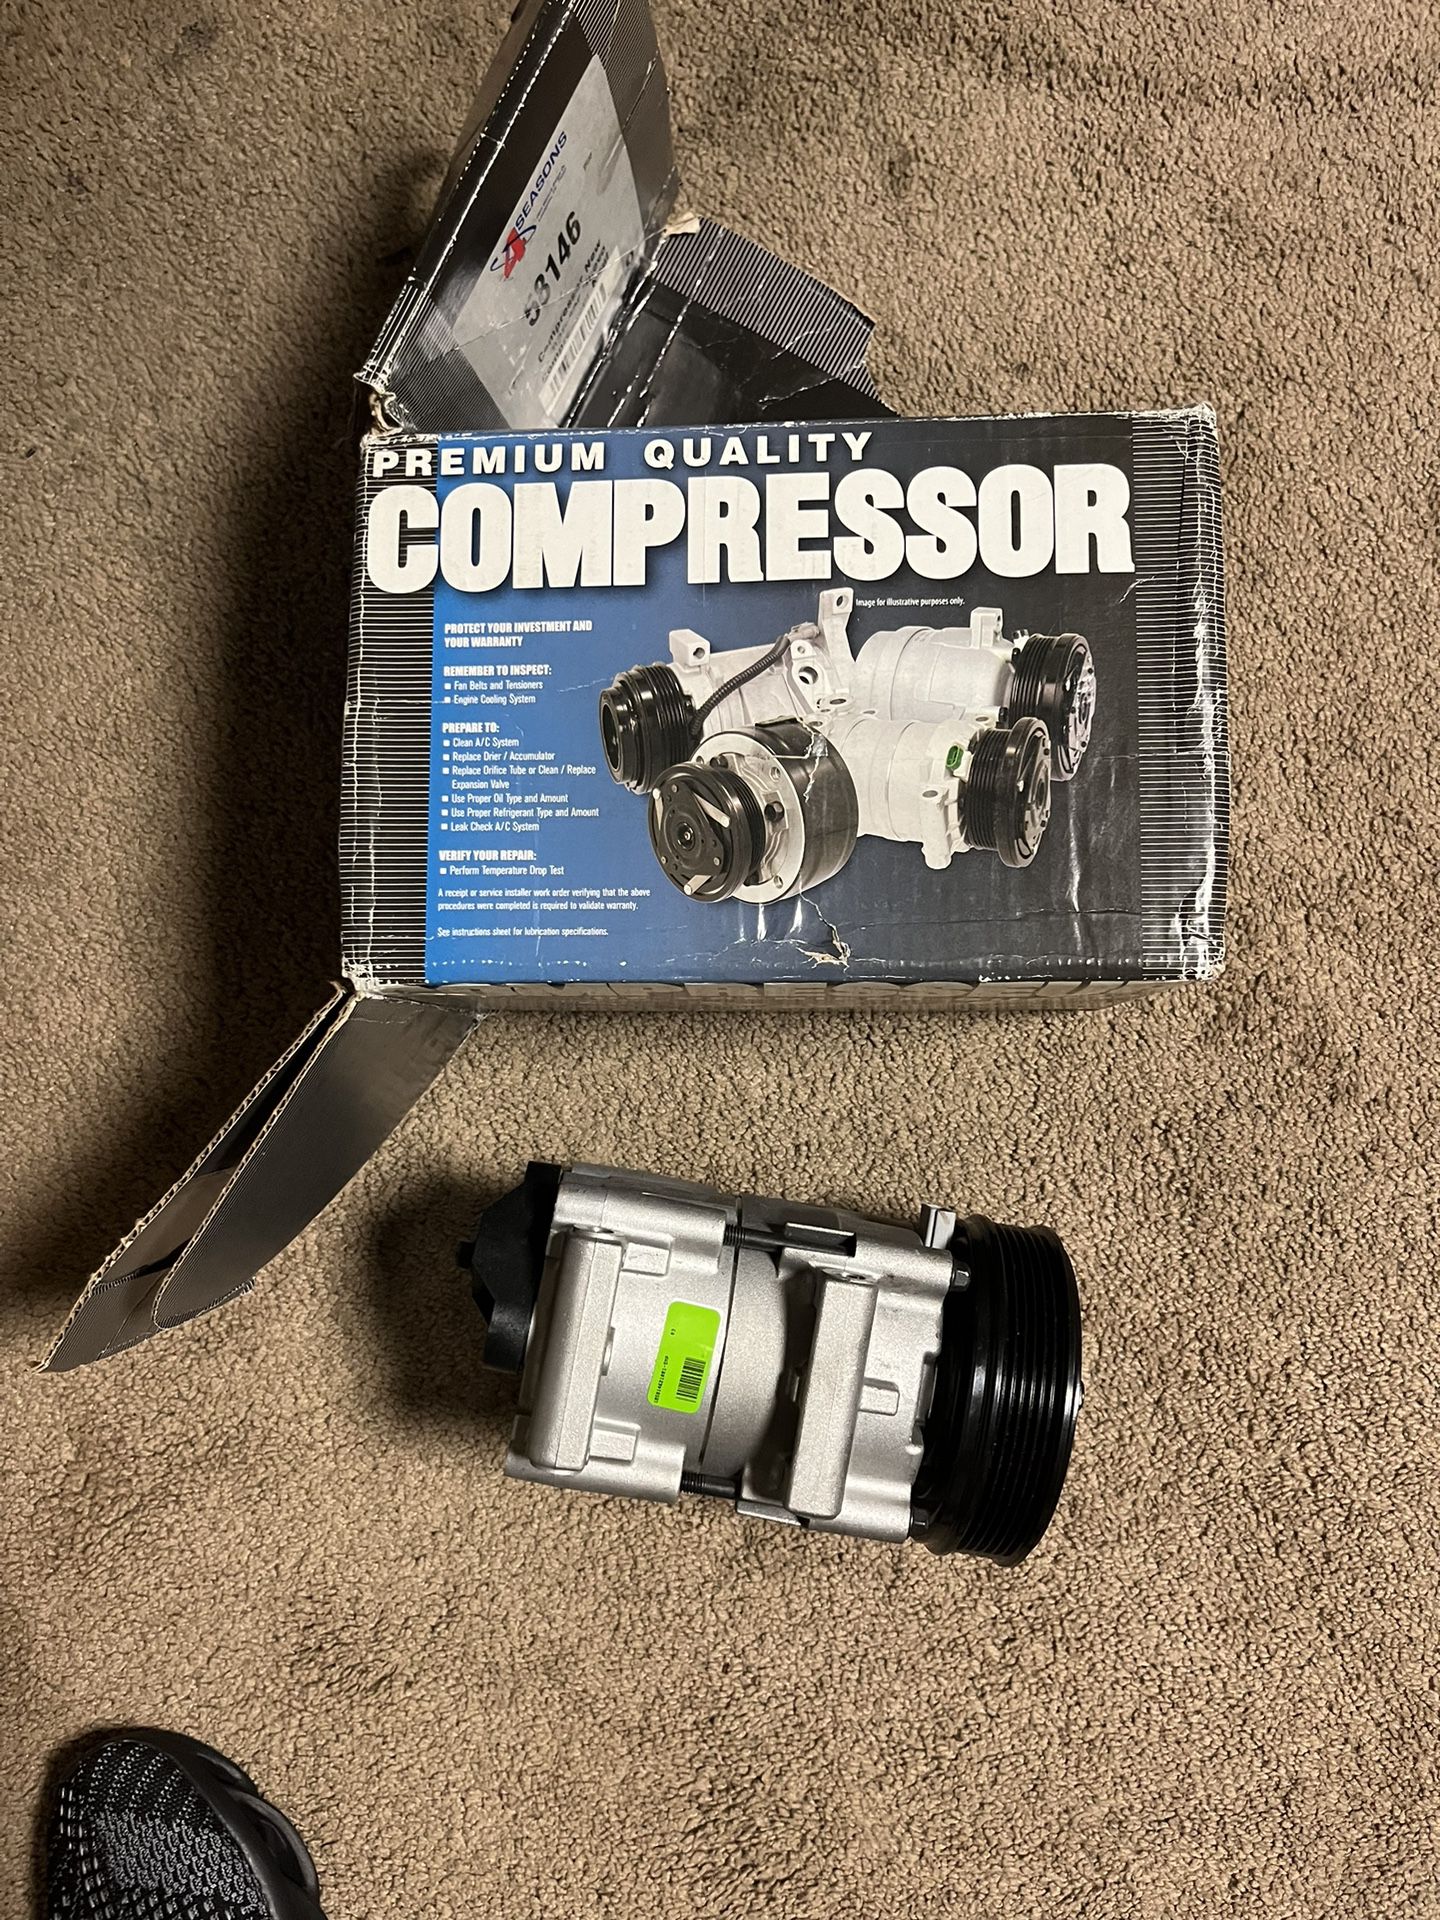 Premium Quality Compressor